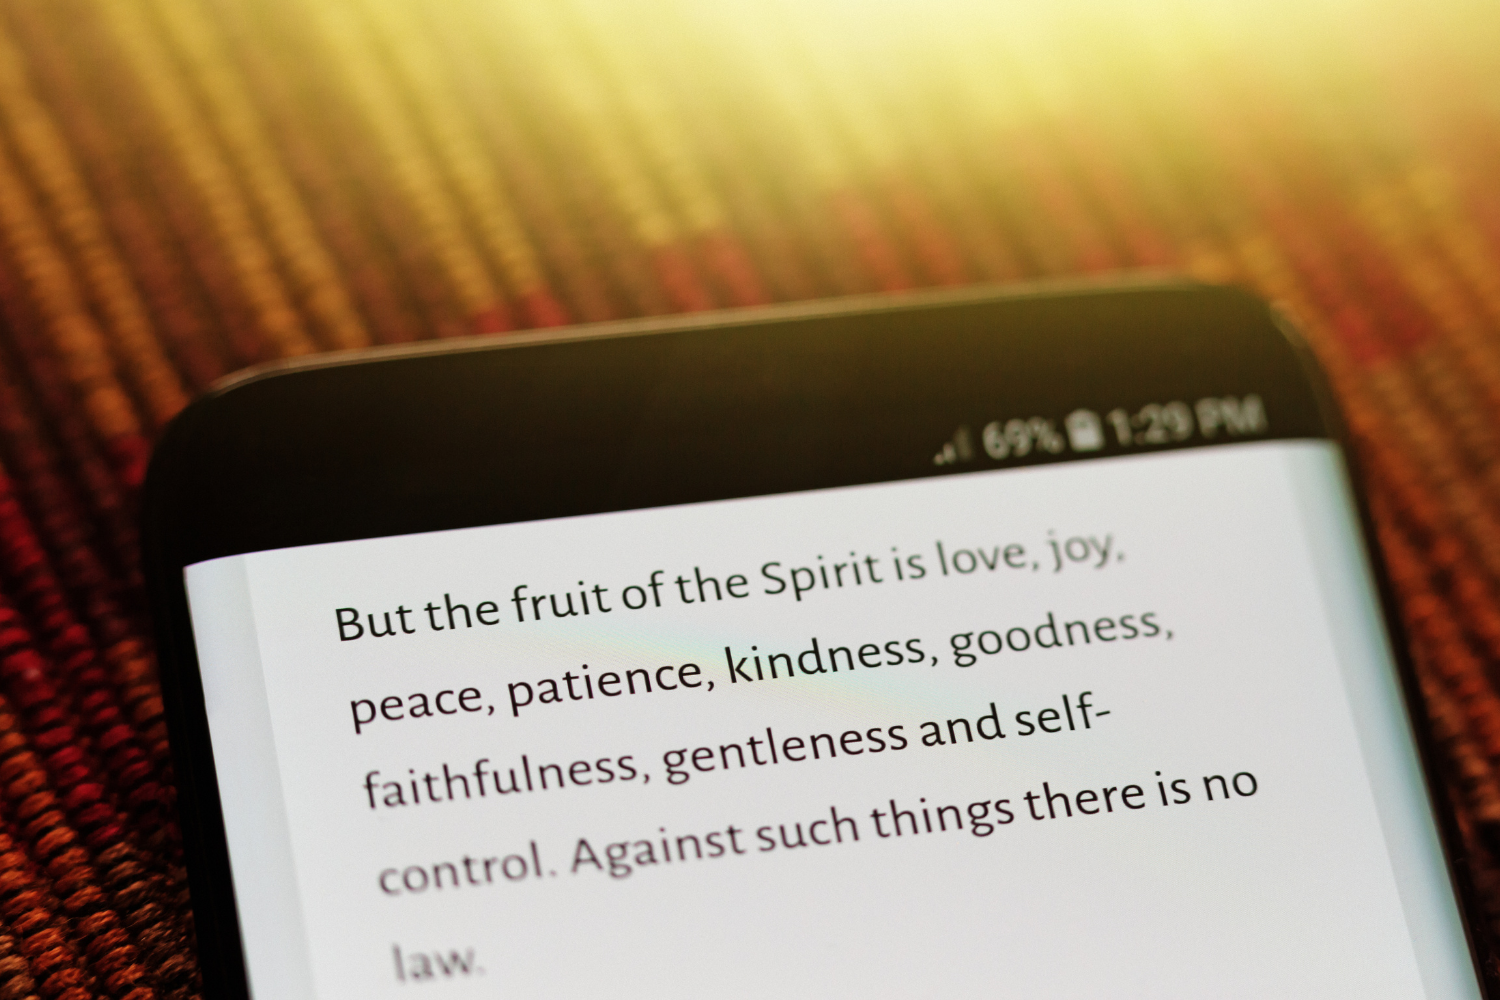 123-acfd6227 Holy Spirit - Fruit of the Spirit